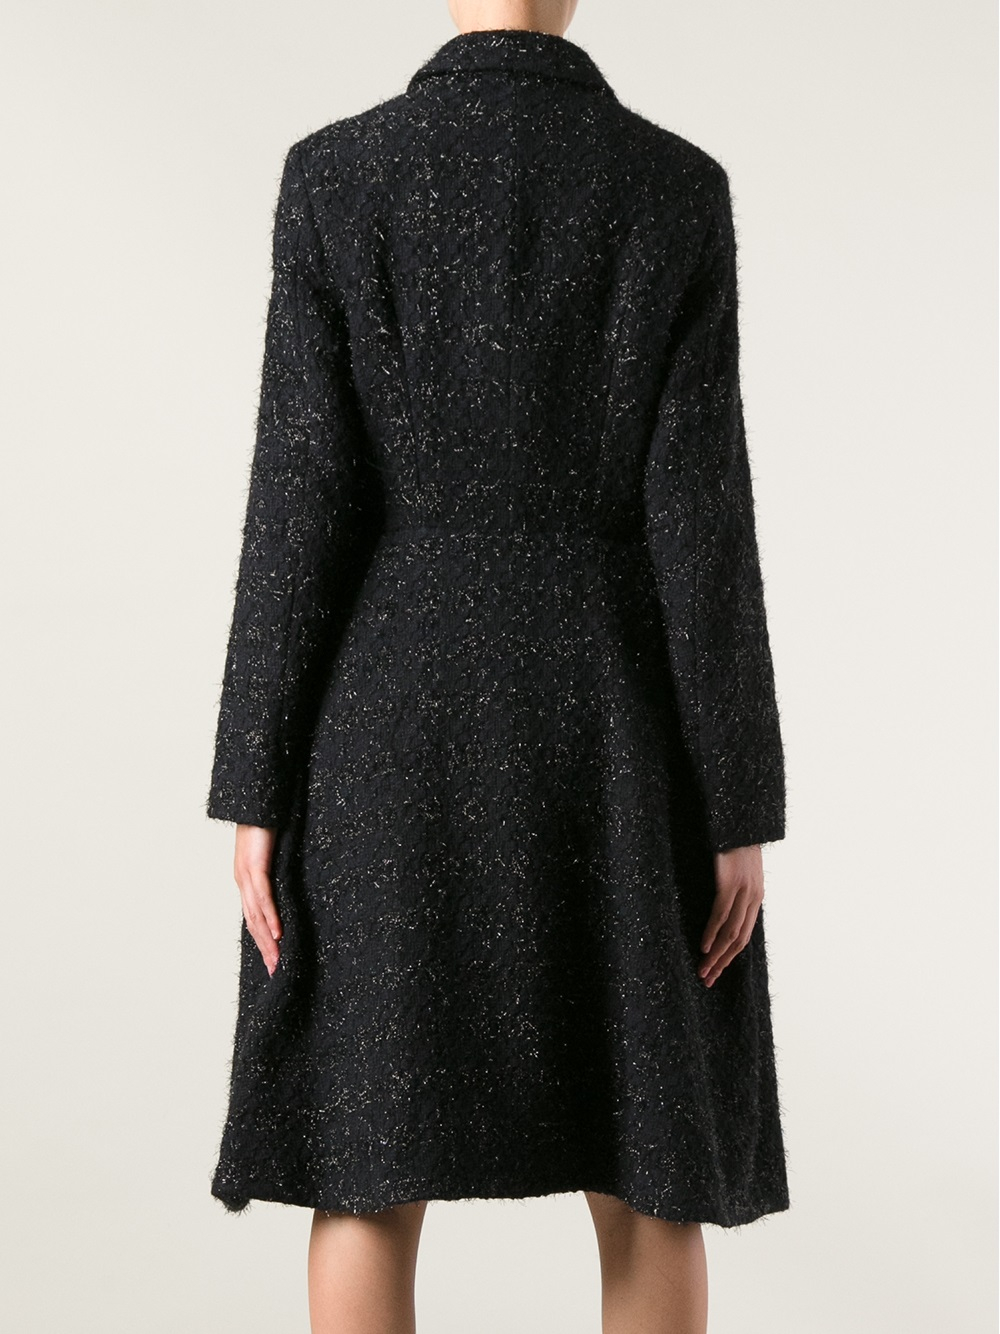 Lyst - Simone rocha Textured Coat in Black